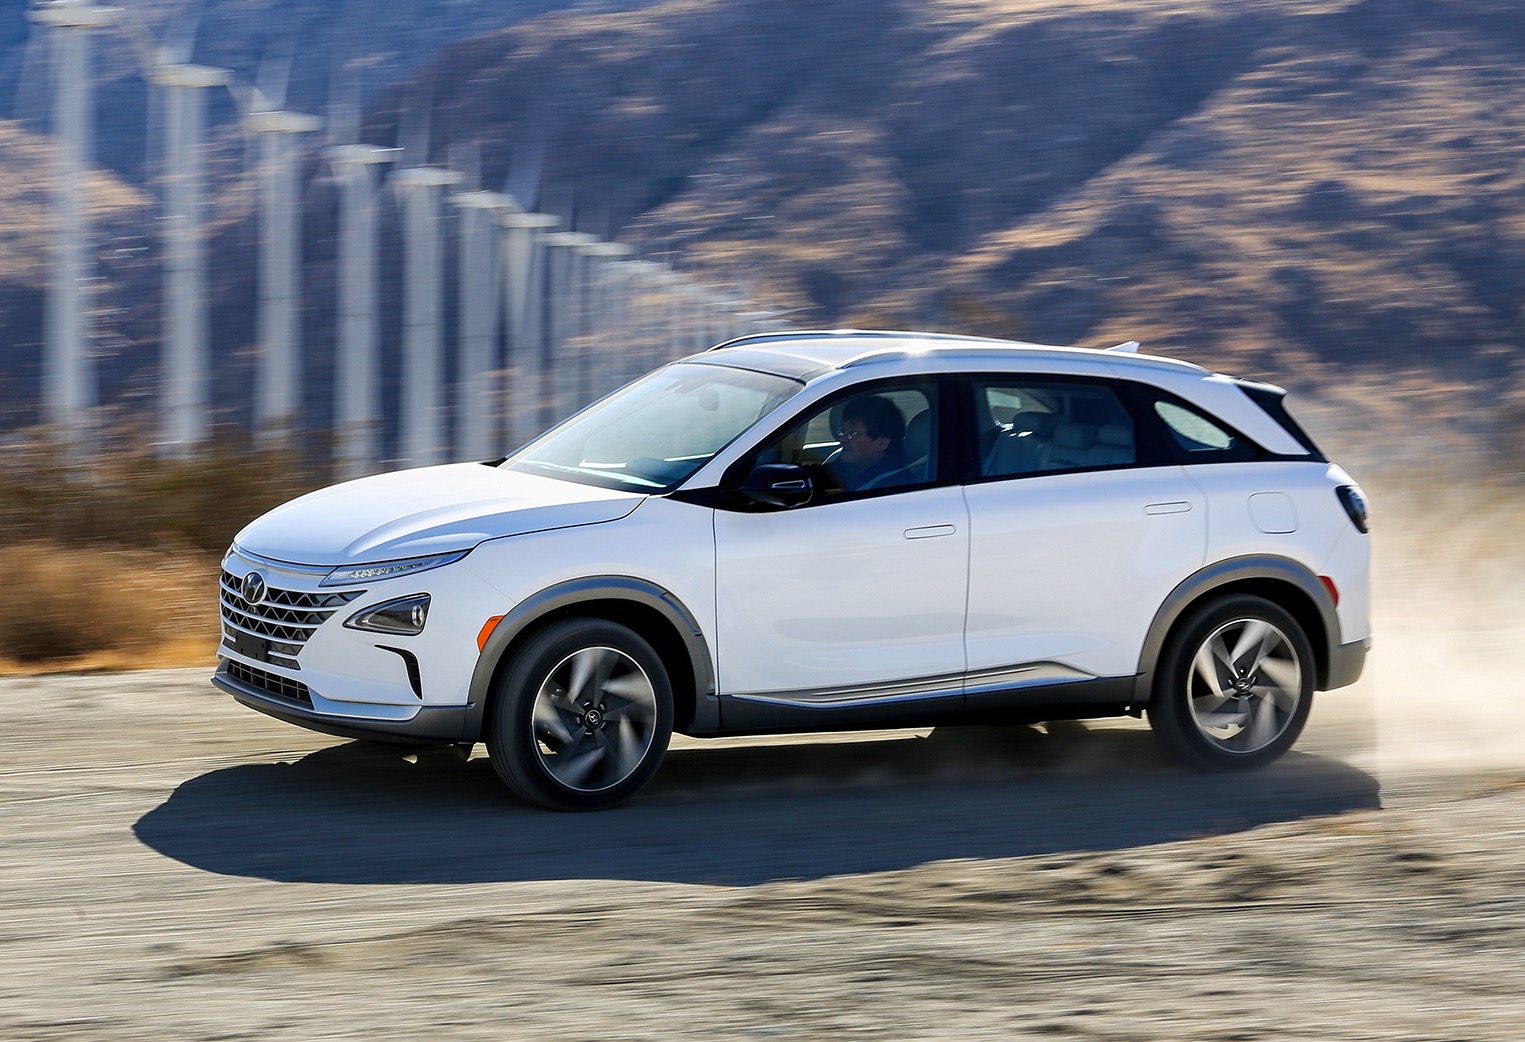 Hyundai NEXO revealed as new fuel cell crossover